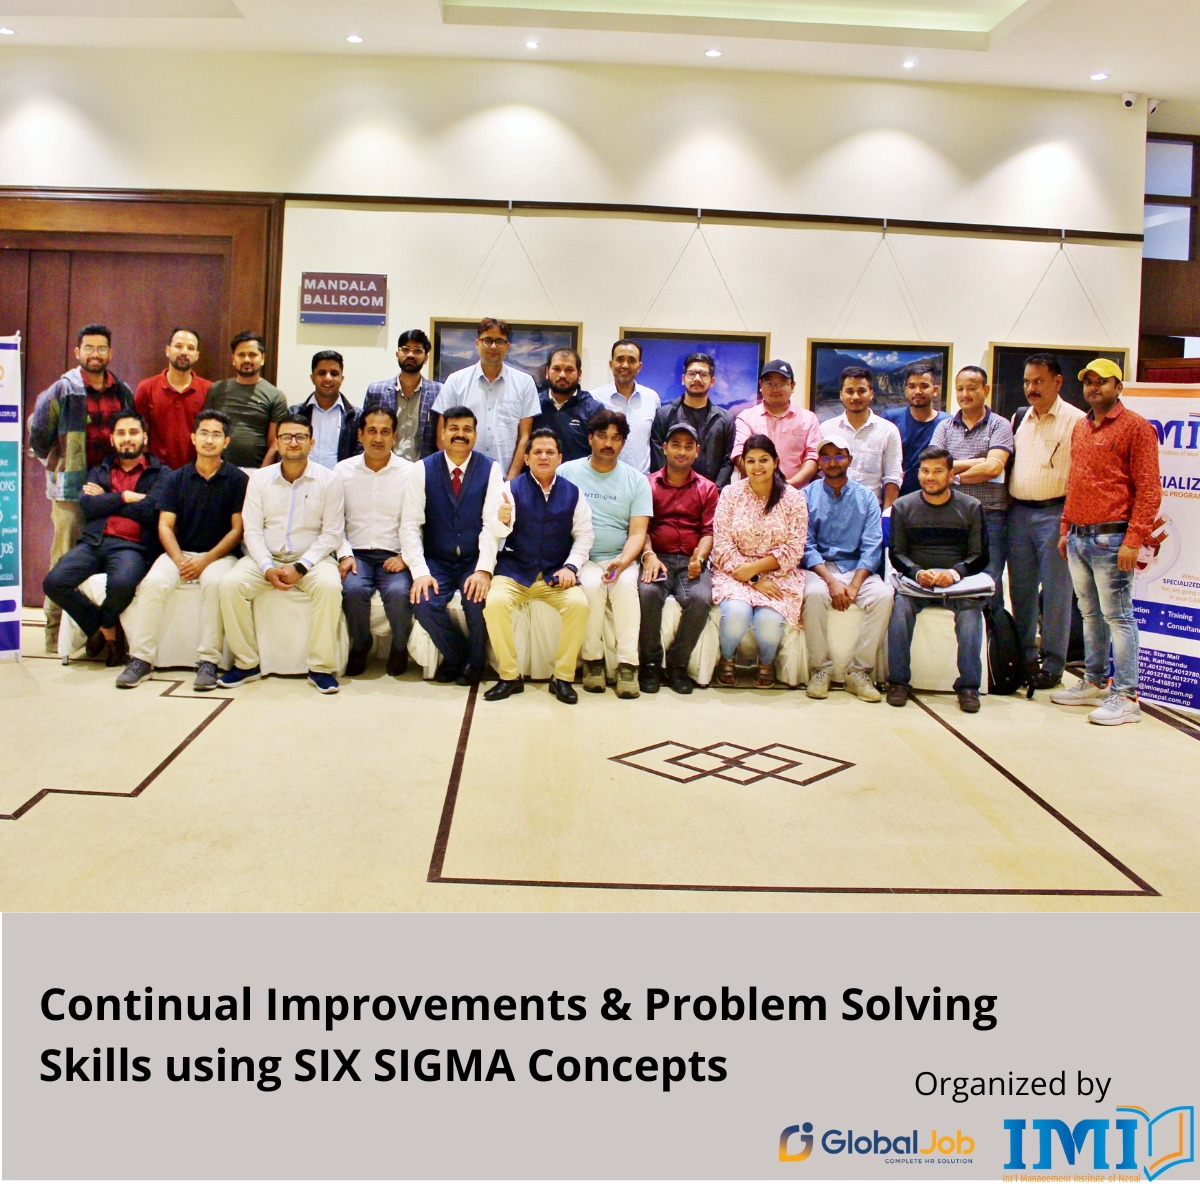 Problem Solving Skills using SIX SIGMA Concepts